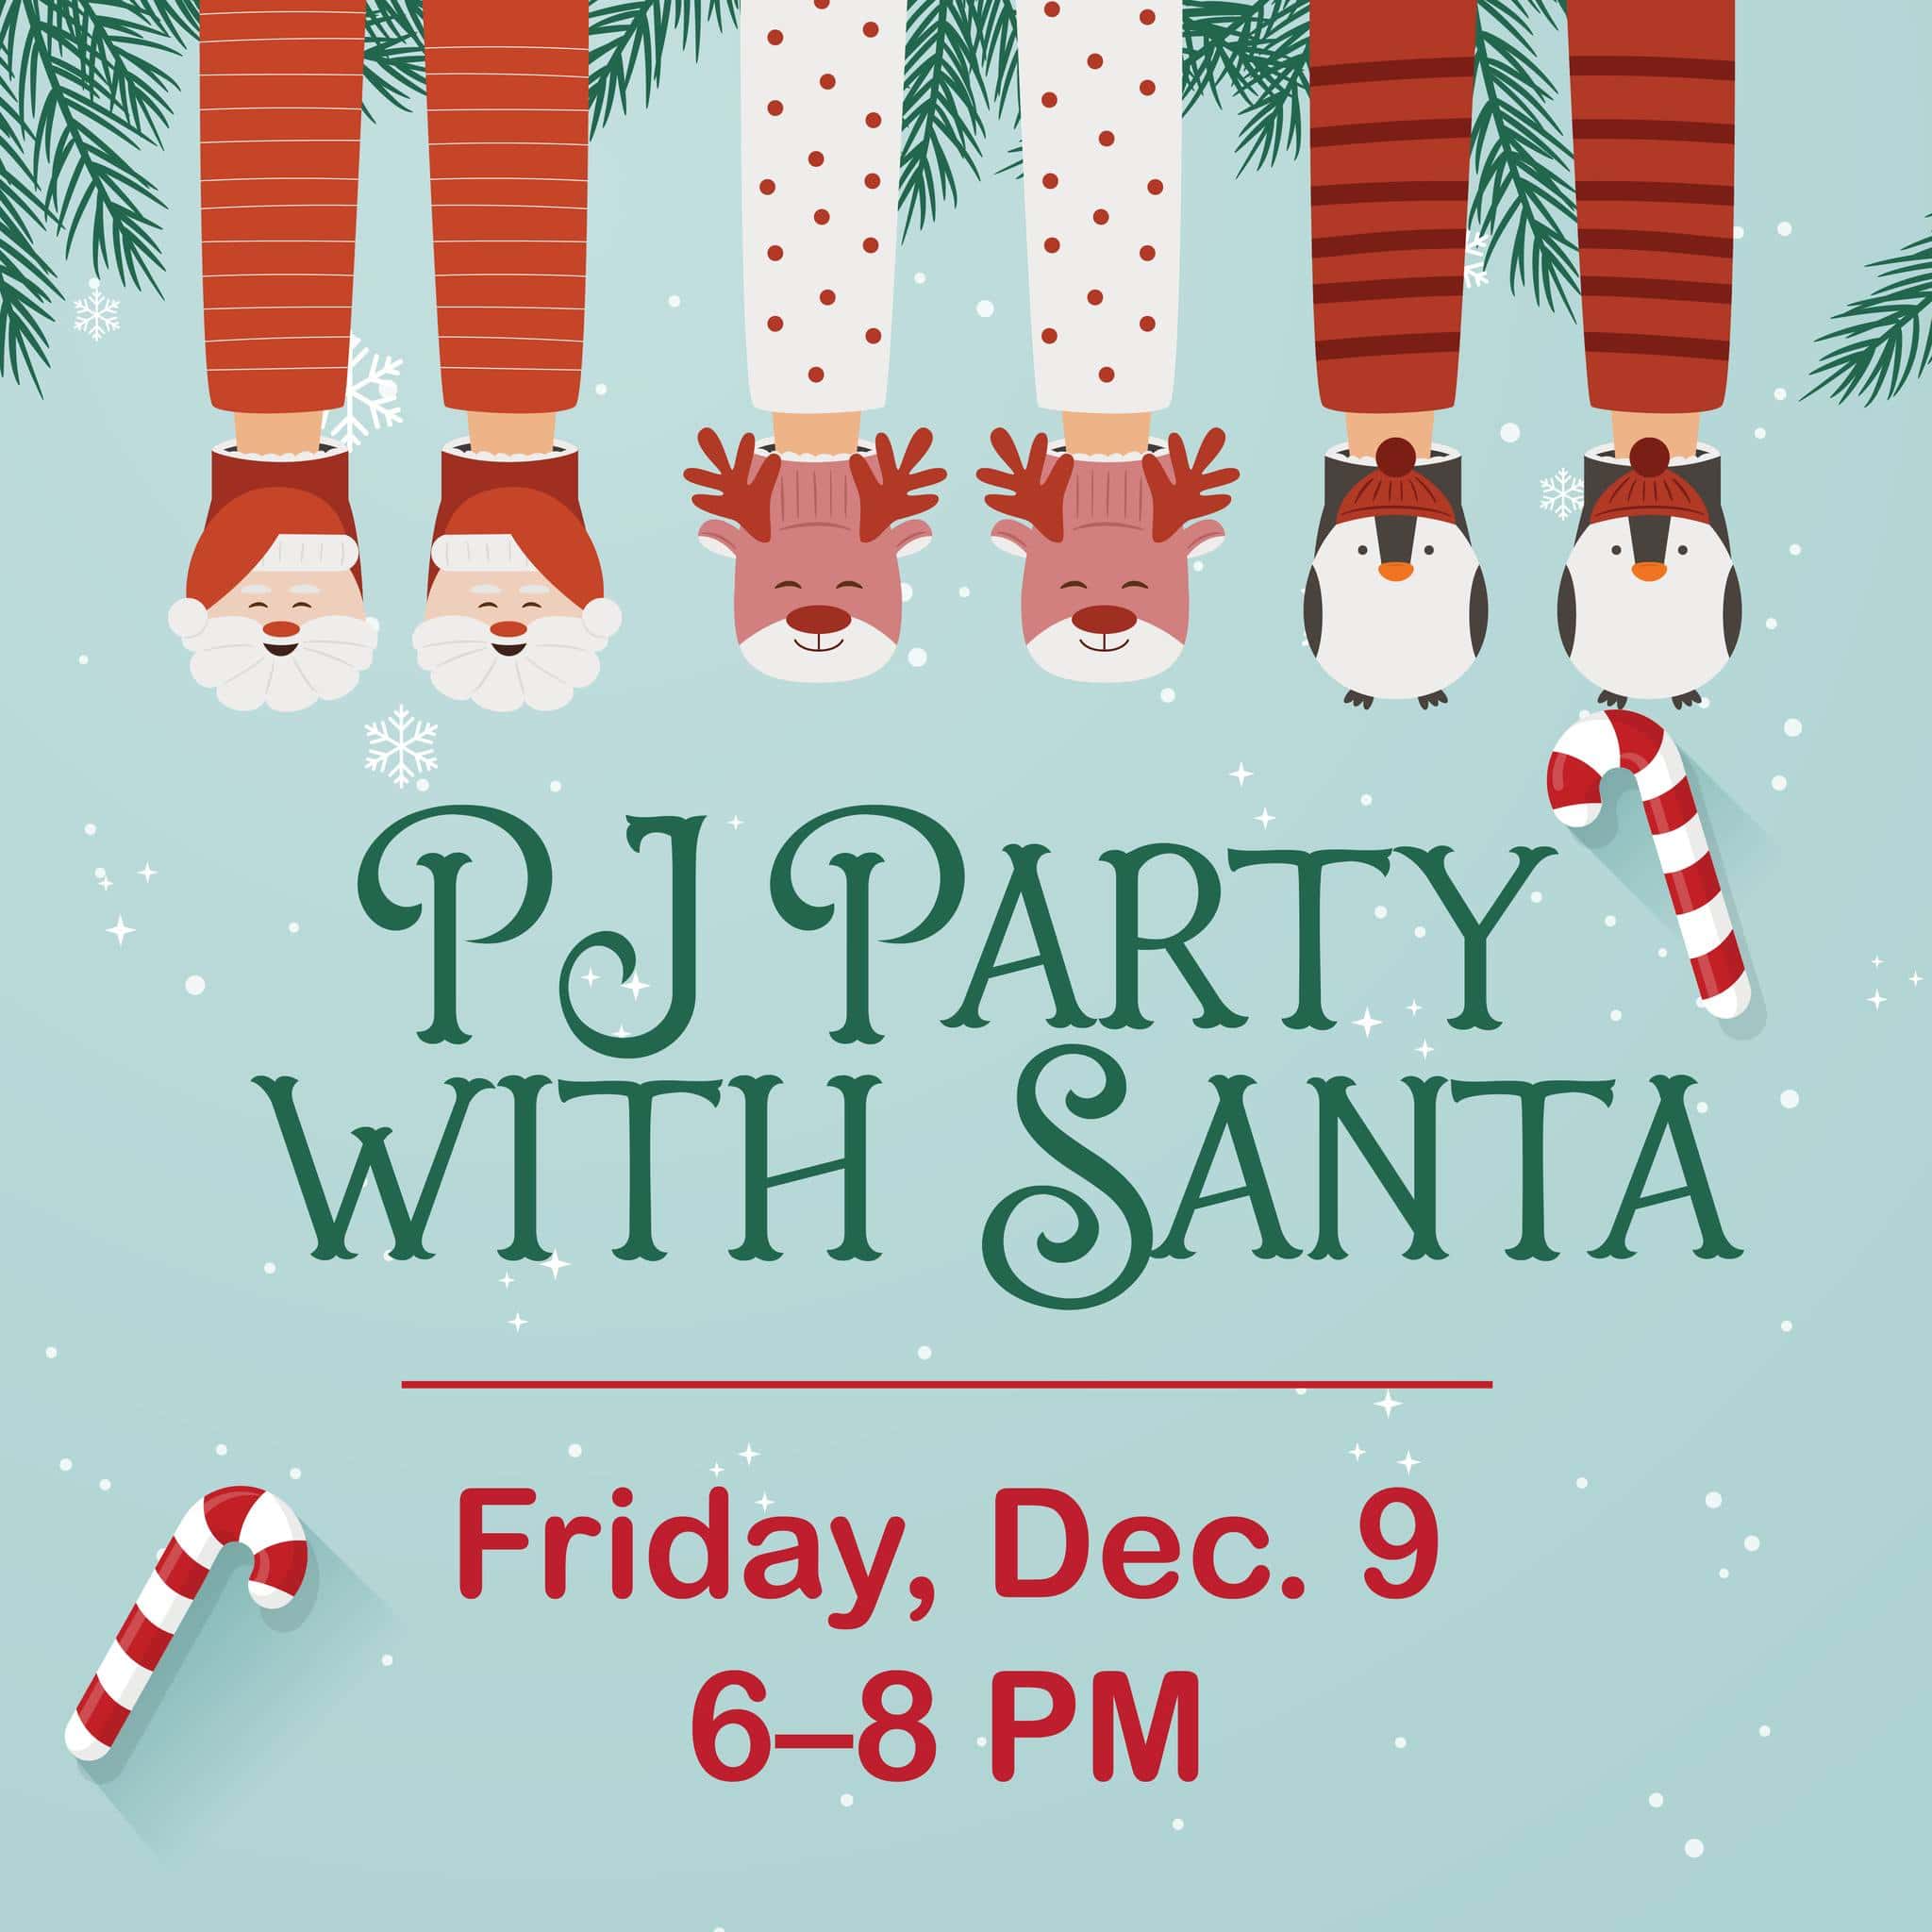 PJ party with Santa